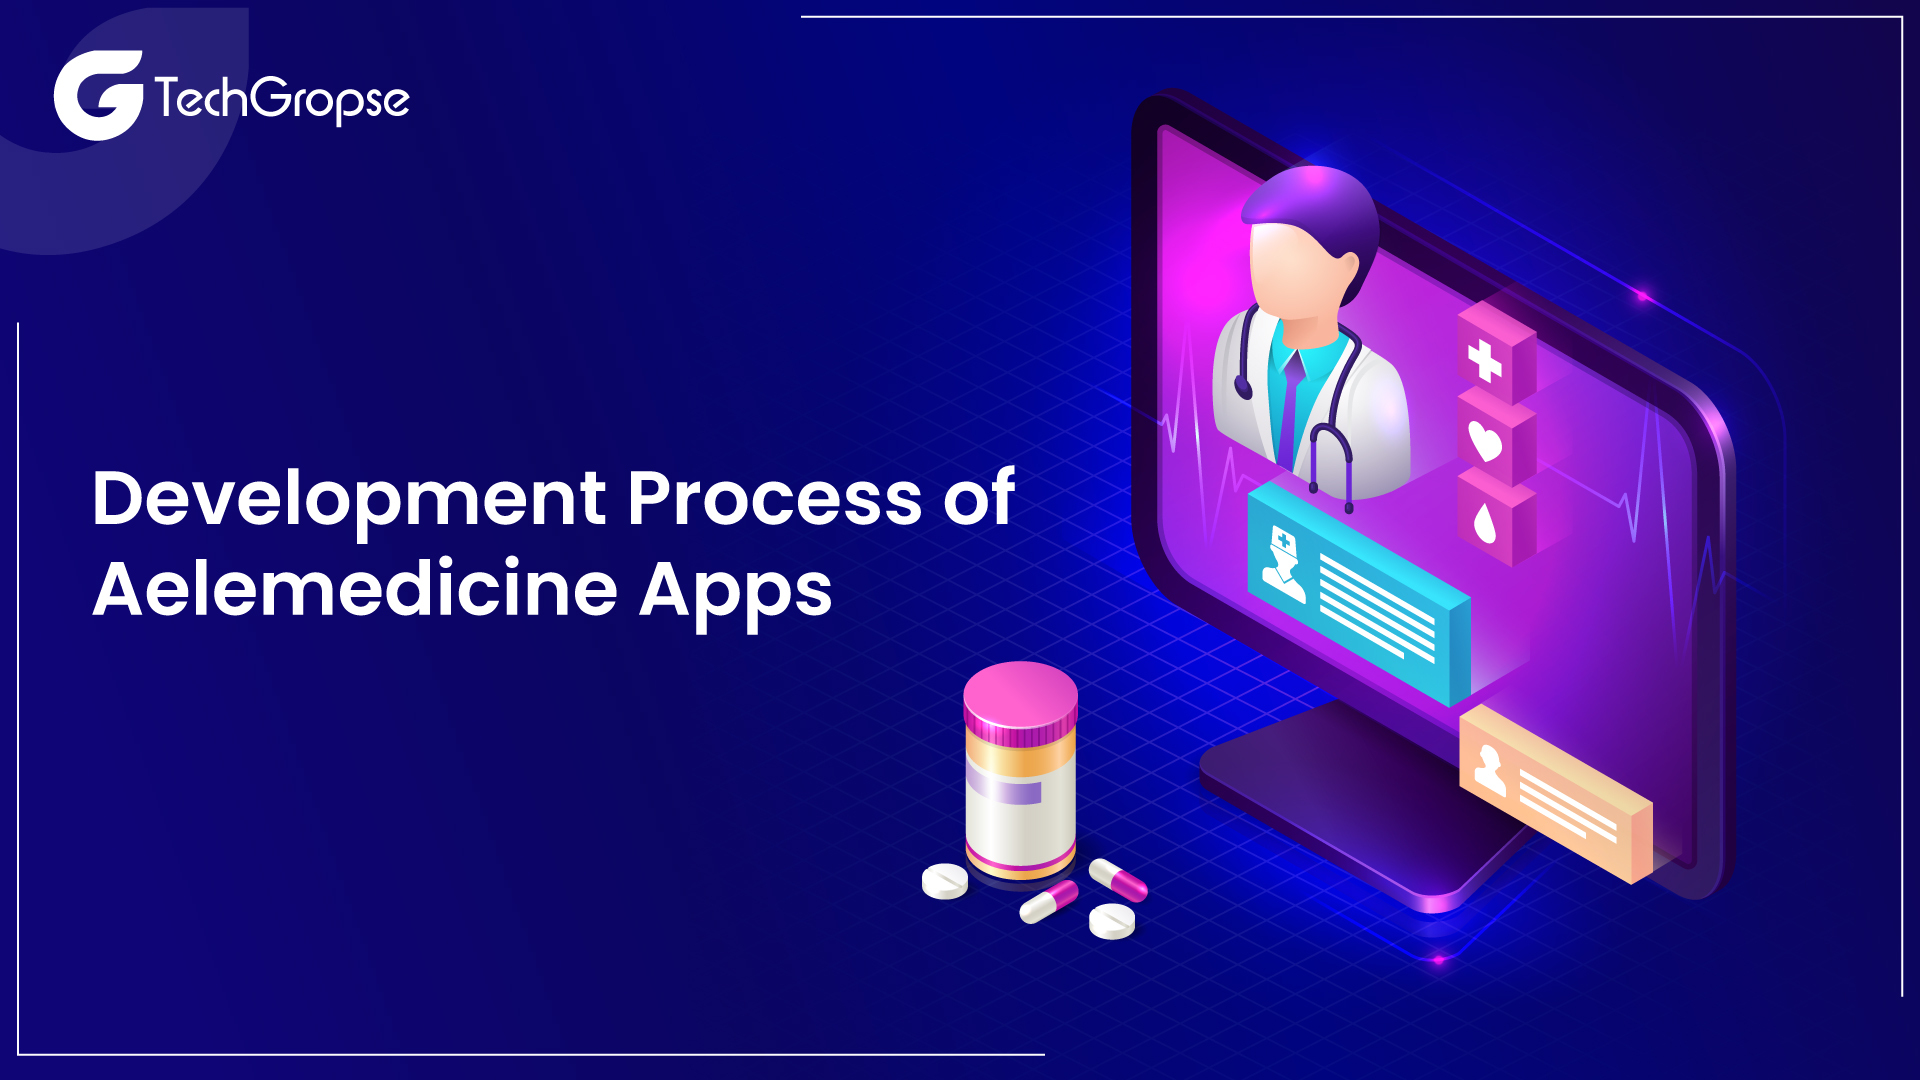 Development Process of Telemedicine Apps